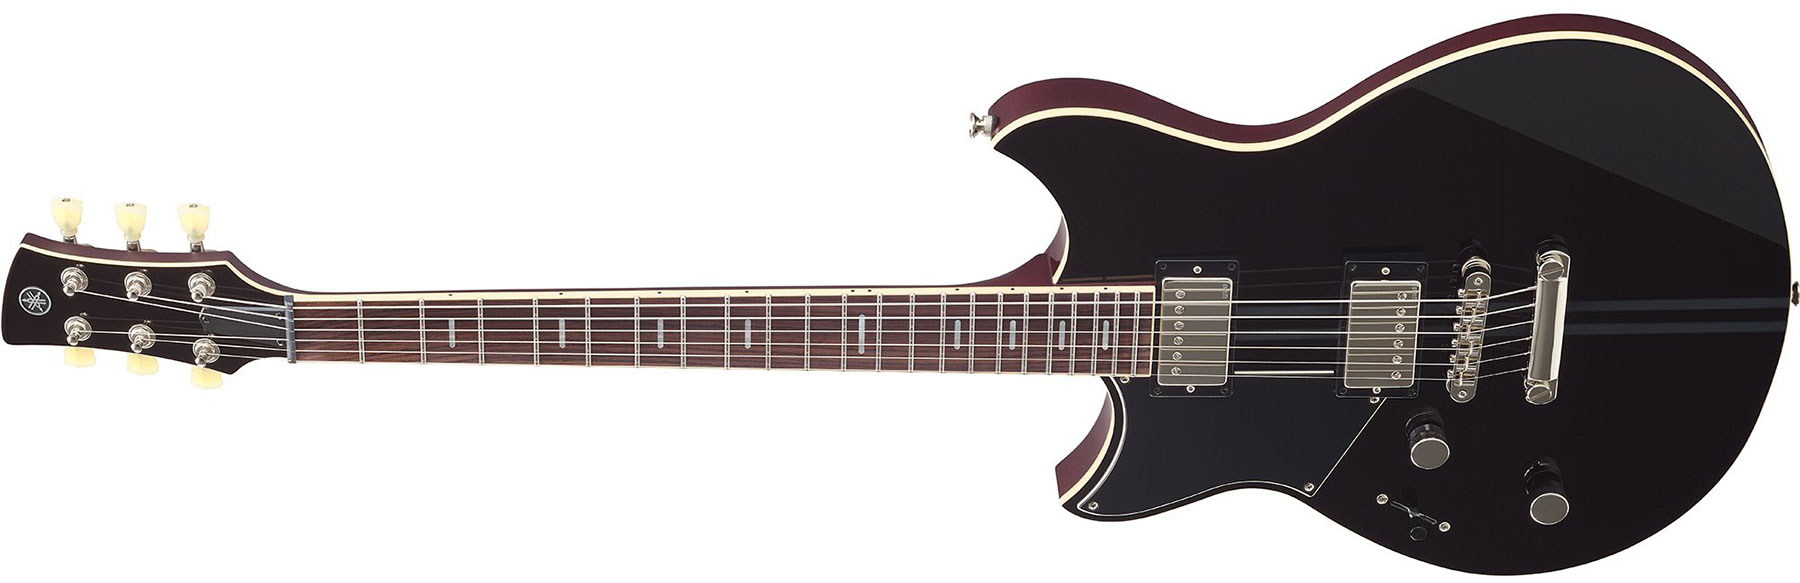 Yamaha Rss20l Revstar Standard Lh Gaucher Hh Ht Rw - Black - Guitarra electrica para zurdos - Variation 1